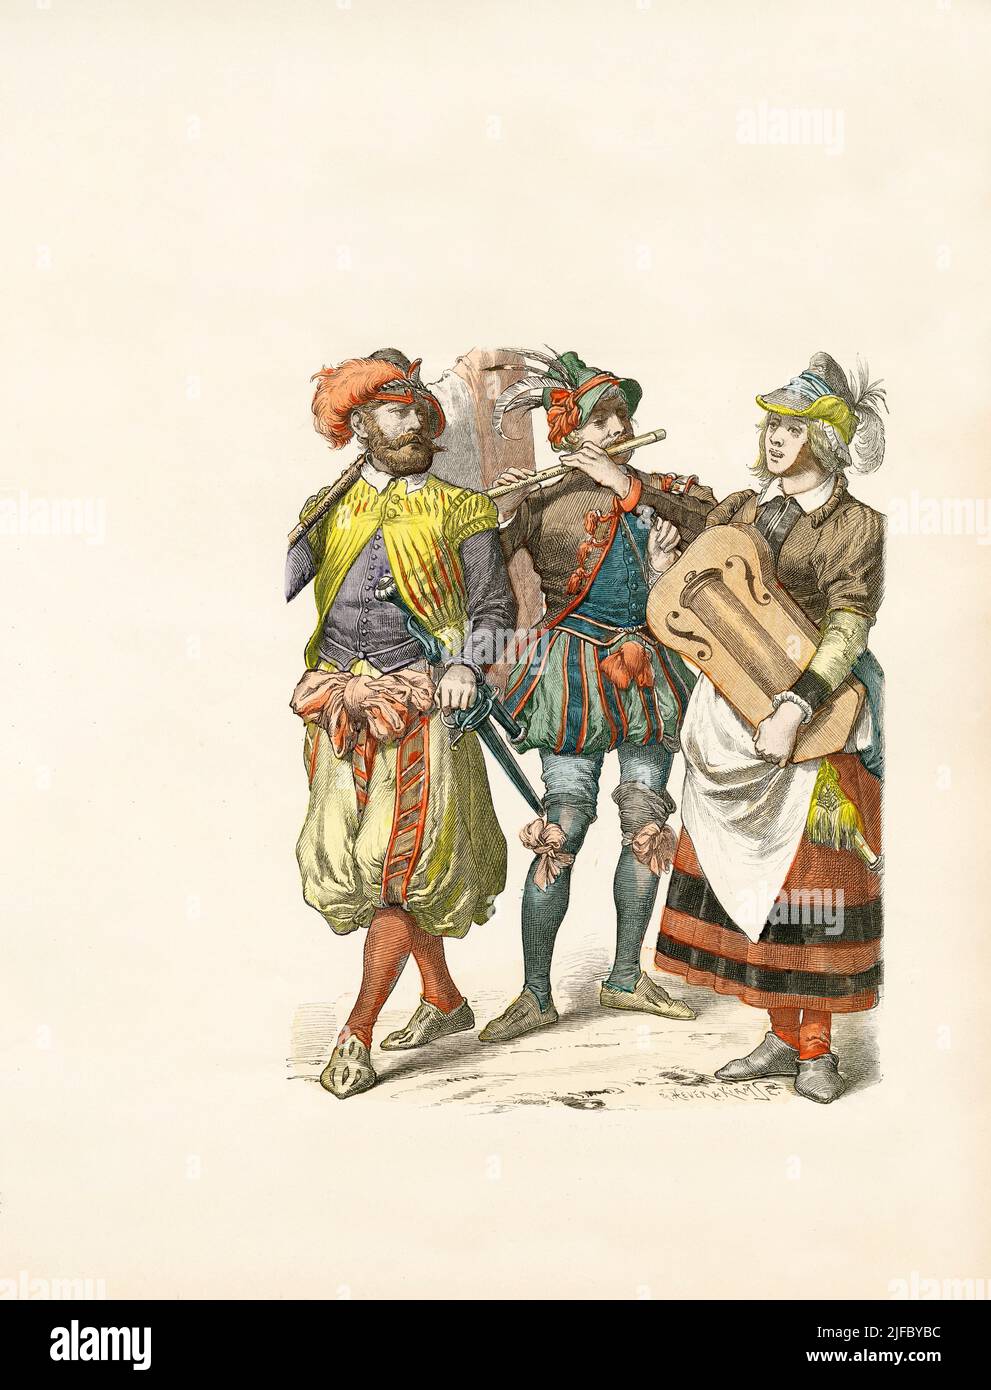 Standard-Bearer, Traveling Musicians, Germany, 1570, Illustration, The History of Costume, Braun & Schneider, Munich, Germany, 1861-1880 Stock Photo